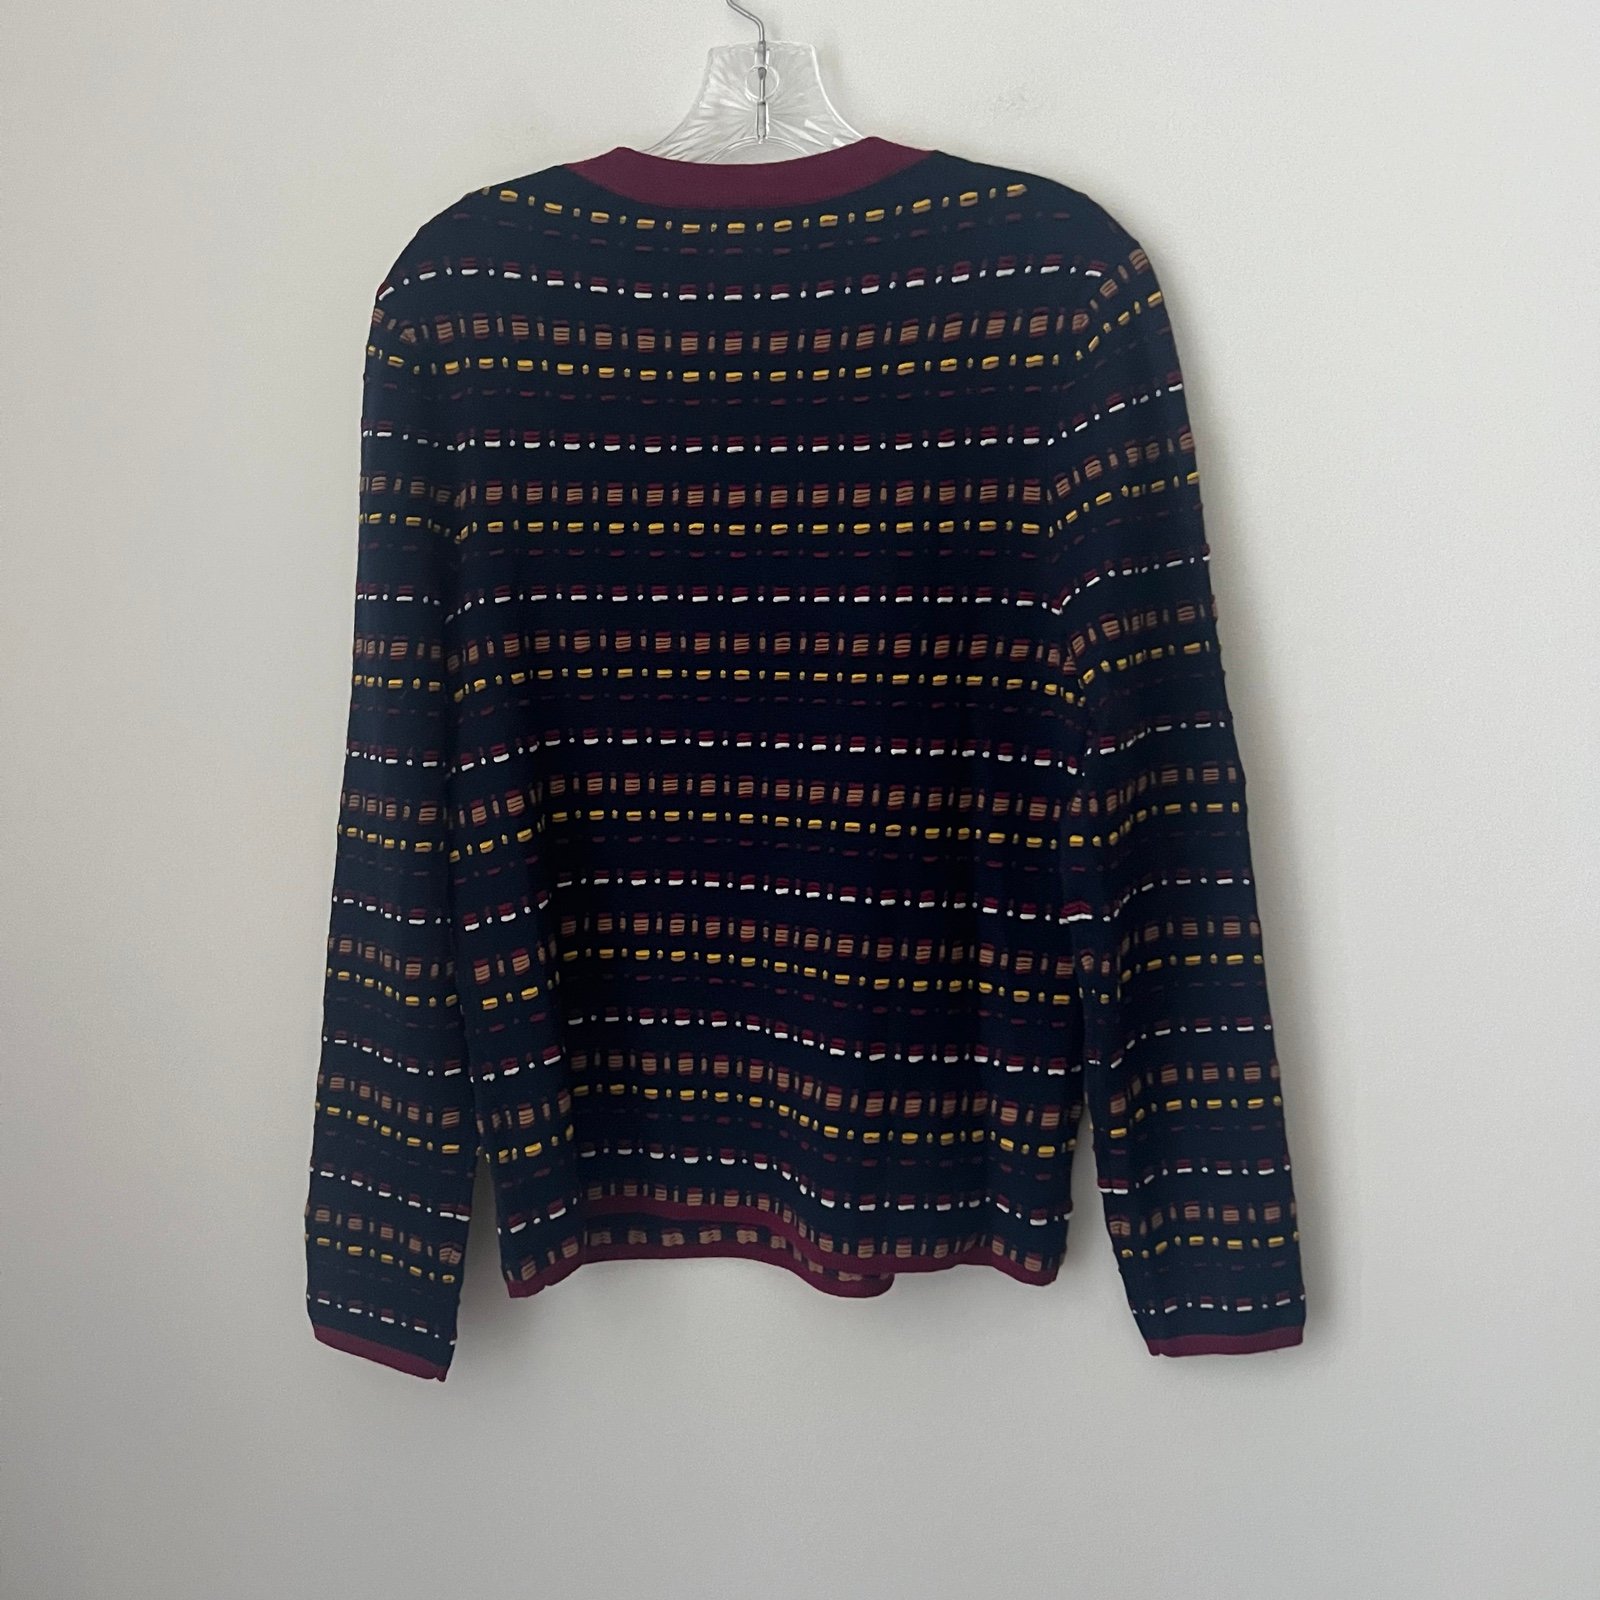 save up to 70% Anthropologie Seen Worn Kept Knit long sleeve sweater top women´s Medium nPFxJGOH9 Everyday Low Prices